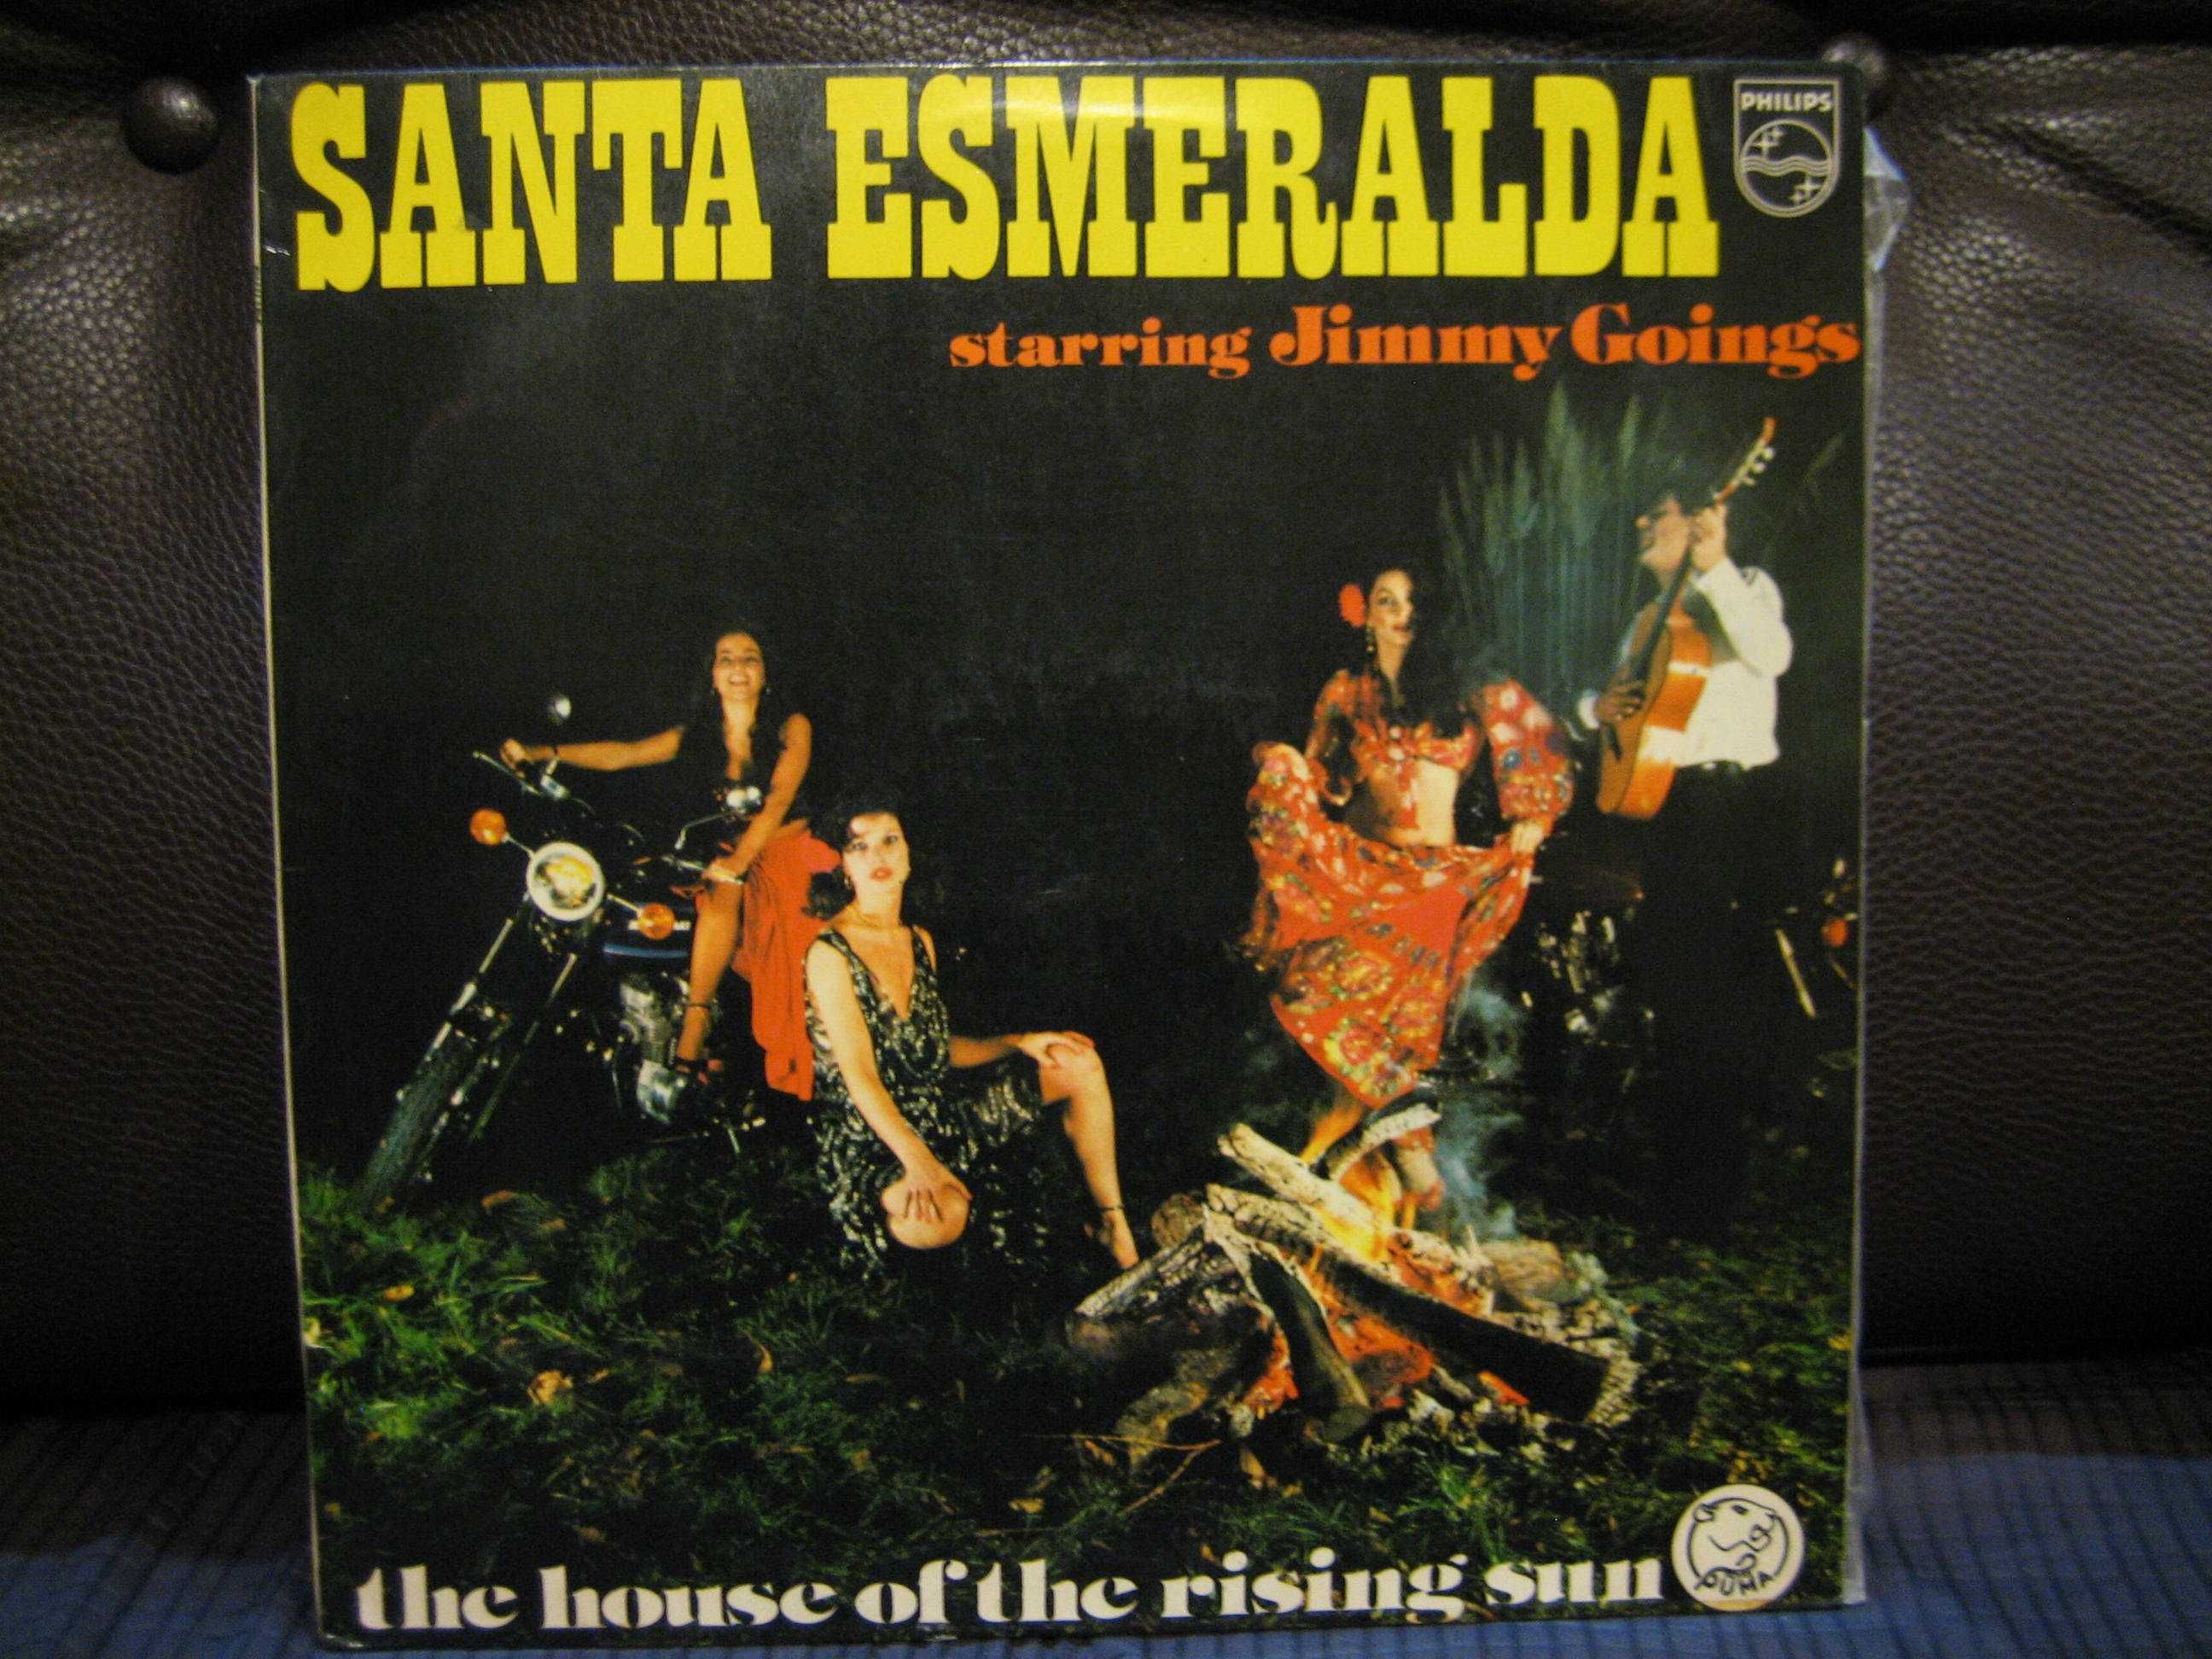 Discos LP Barbra Straisand , Santa Esmeralda, Johnny Warman , Machine